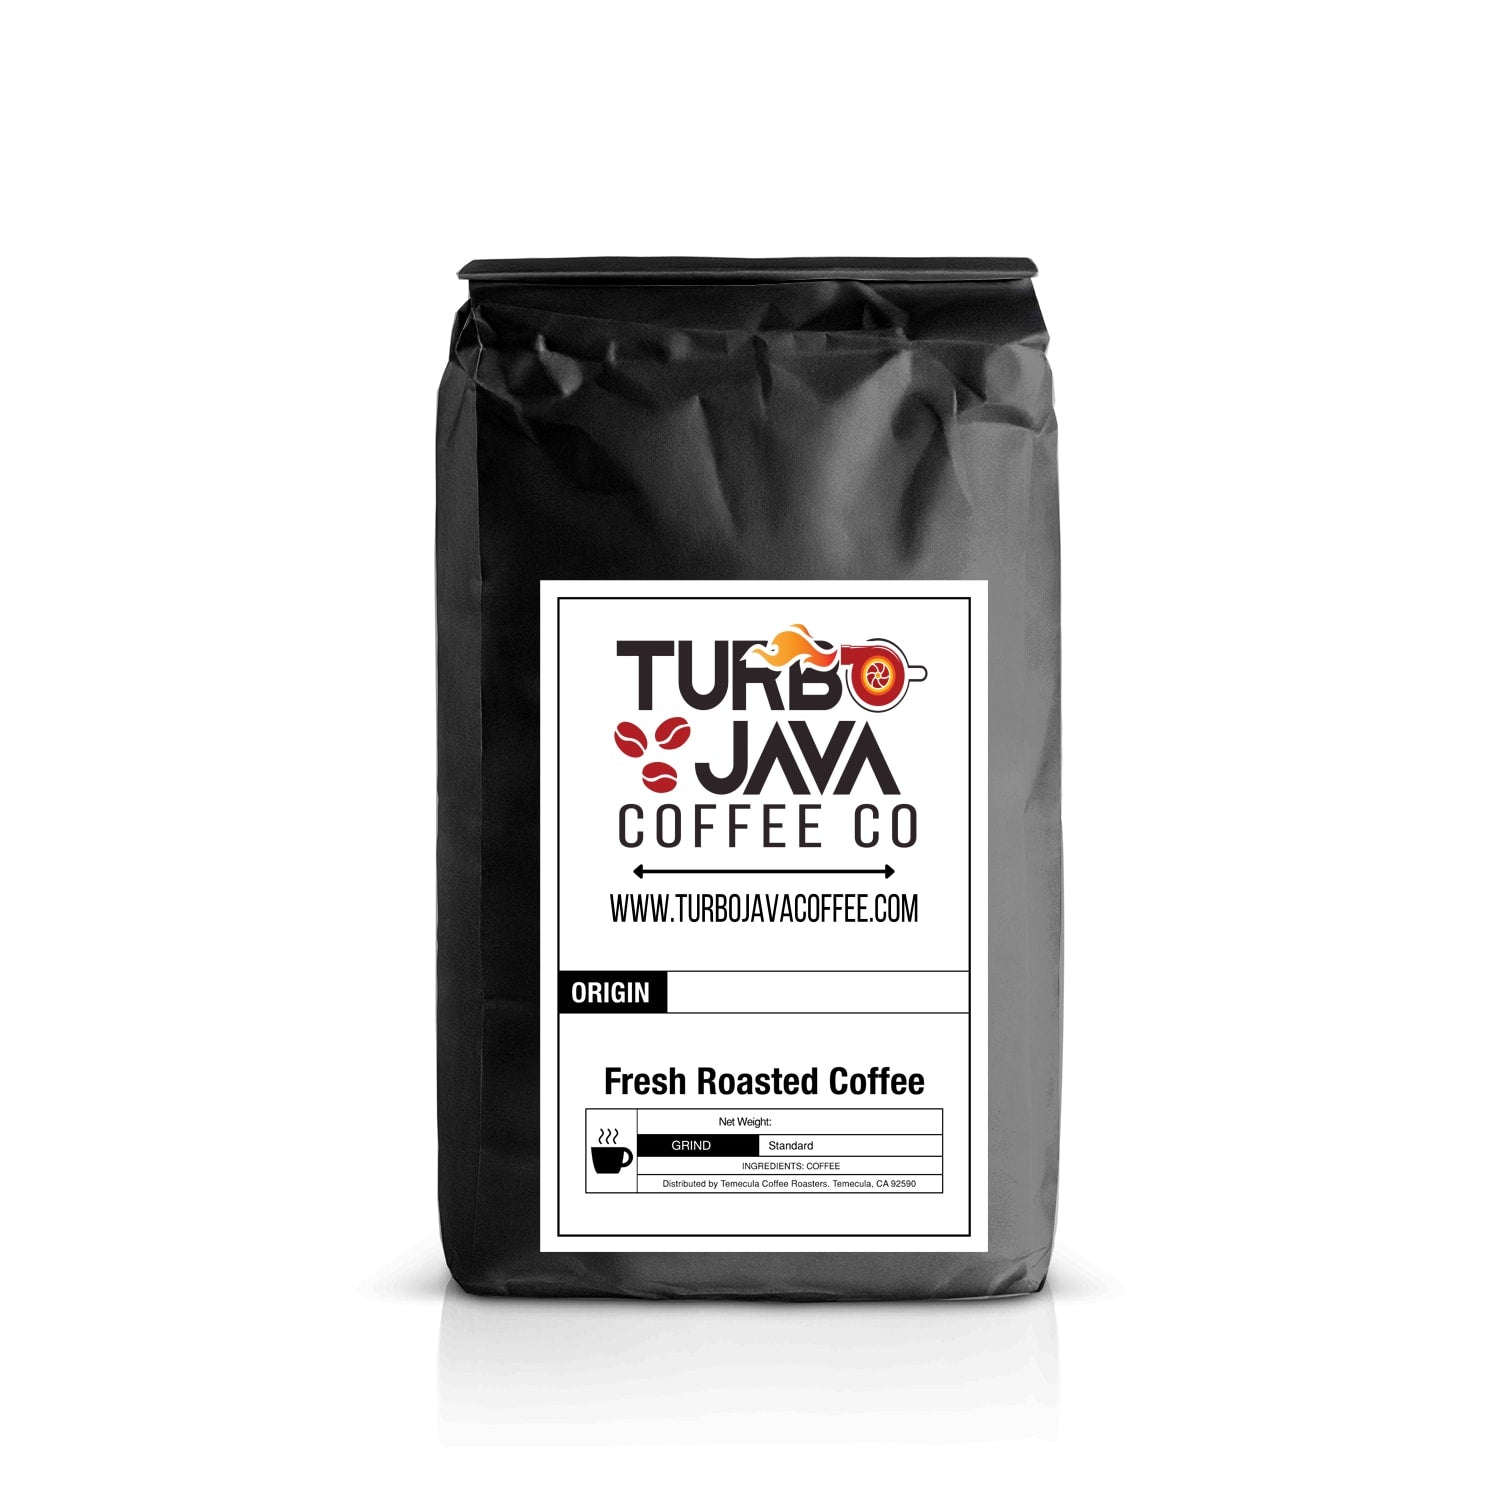 Turbo Java Coffee Co. Brazil Santos Coffee 12 oz / Standard,12 oz / Coarse,12 oz / Espresso,12 oz / Whole Bean,1 lb / Standard,1 lb / Coarse,1 lb / Espresso,1 lb / Whole Bean,2 lb / Standard,2 lb / Coarse,2 lb / Espresso,2 lb / Whole Bean,5 lb / Standard,5 lb / Coarse,5 lb / Espresso,5 lb / Whole Bean,12 lb / Standard,12 lb / Coarse,12 lb / Espresso,12 lb / Whole Bean